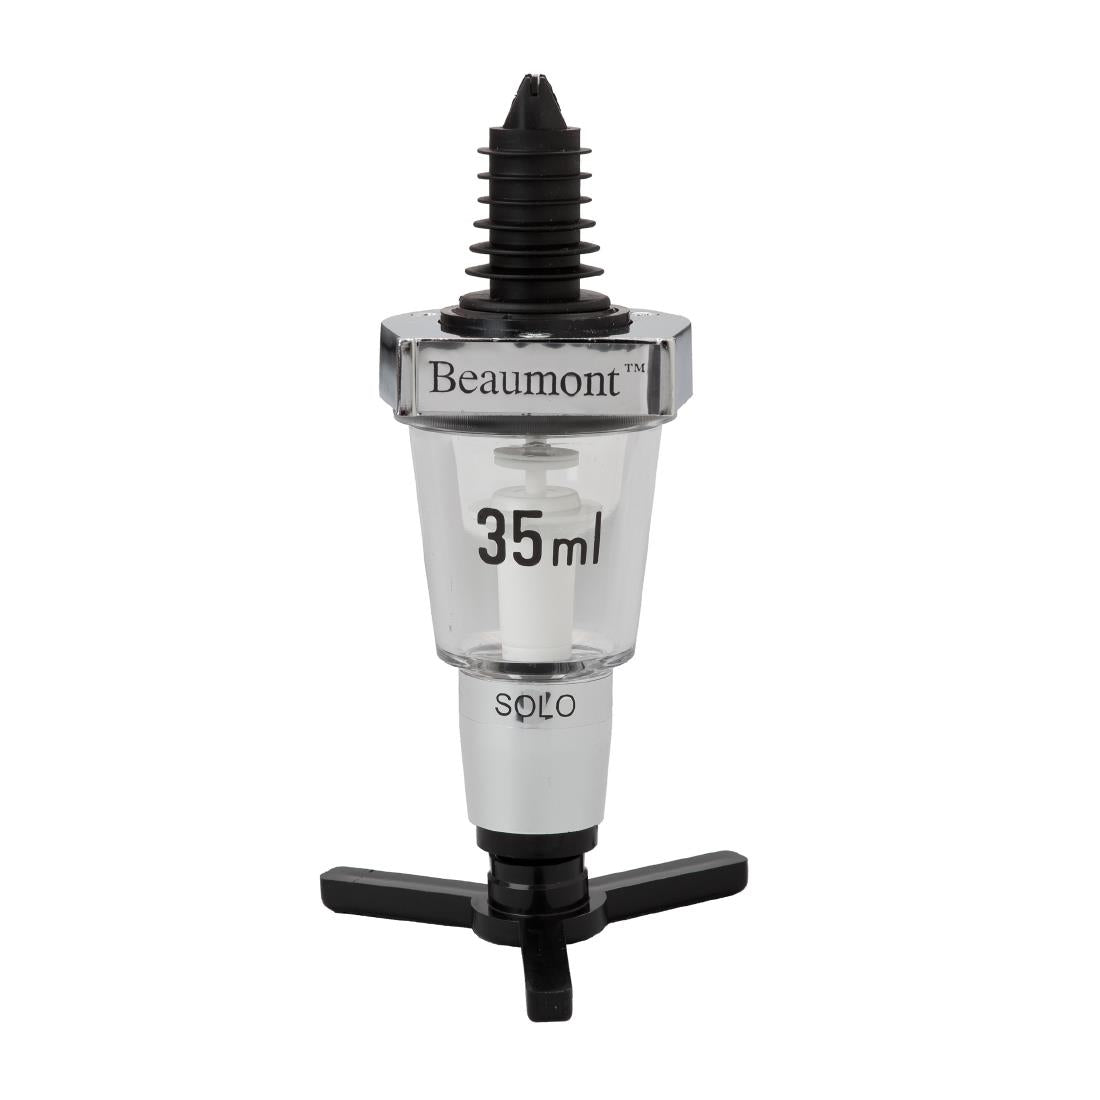 CZ321 Beaumont Chrome Solo Spirit Measure 35ml JD Catering Equipment Solutions Ltd